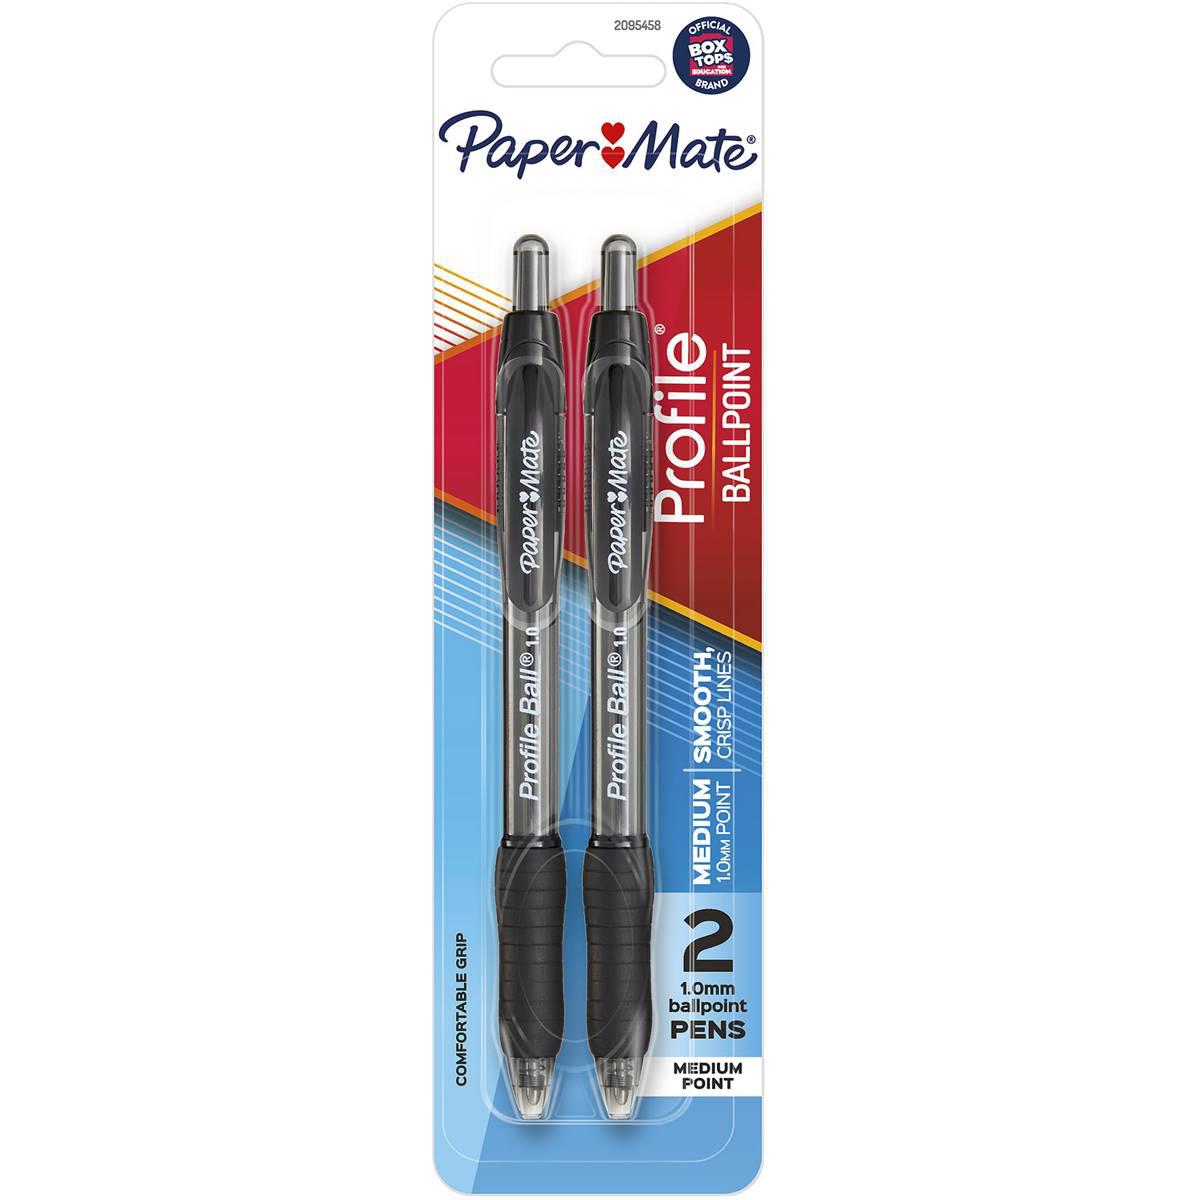 Papermate Profile 1.0mm Ballpoint Pens Black 2 Pack